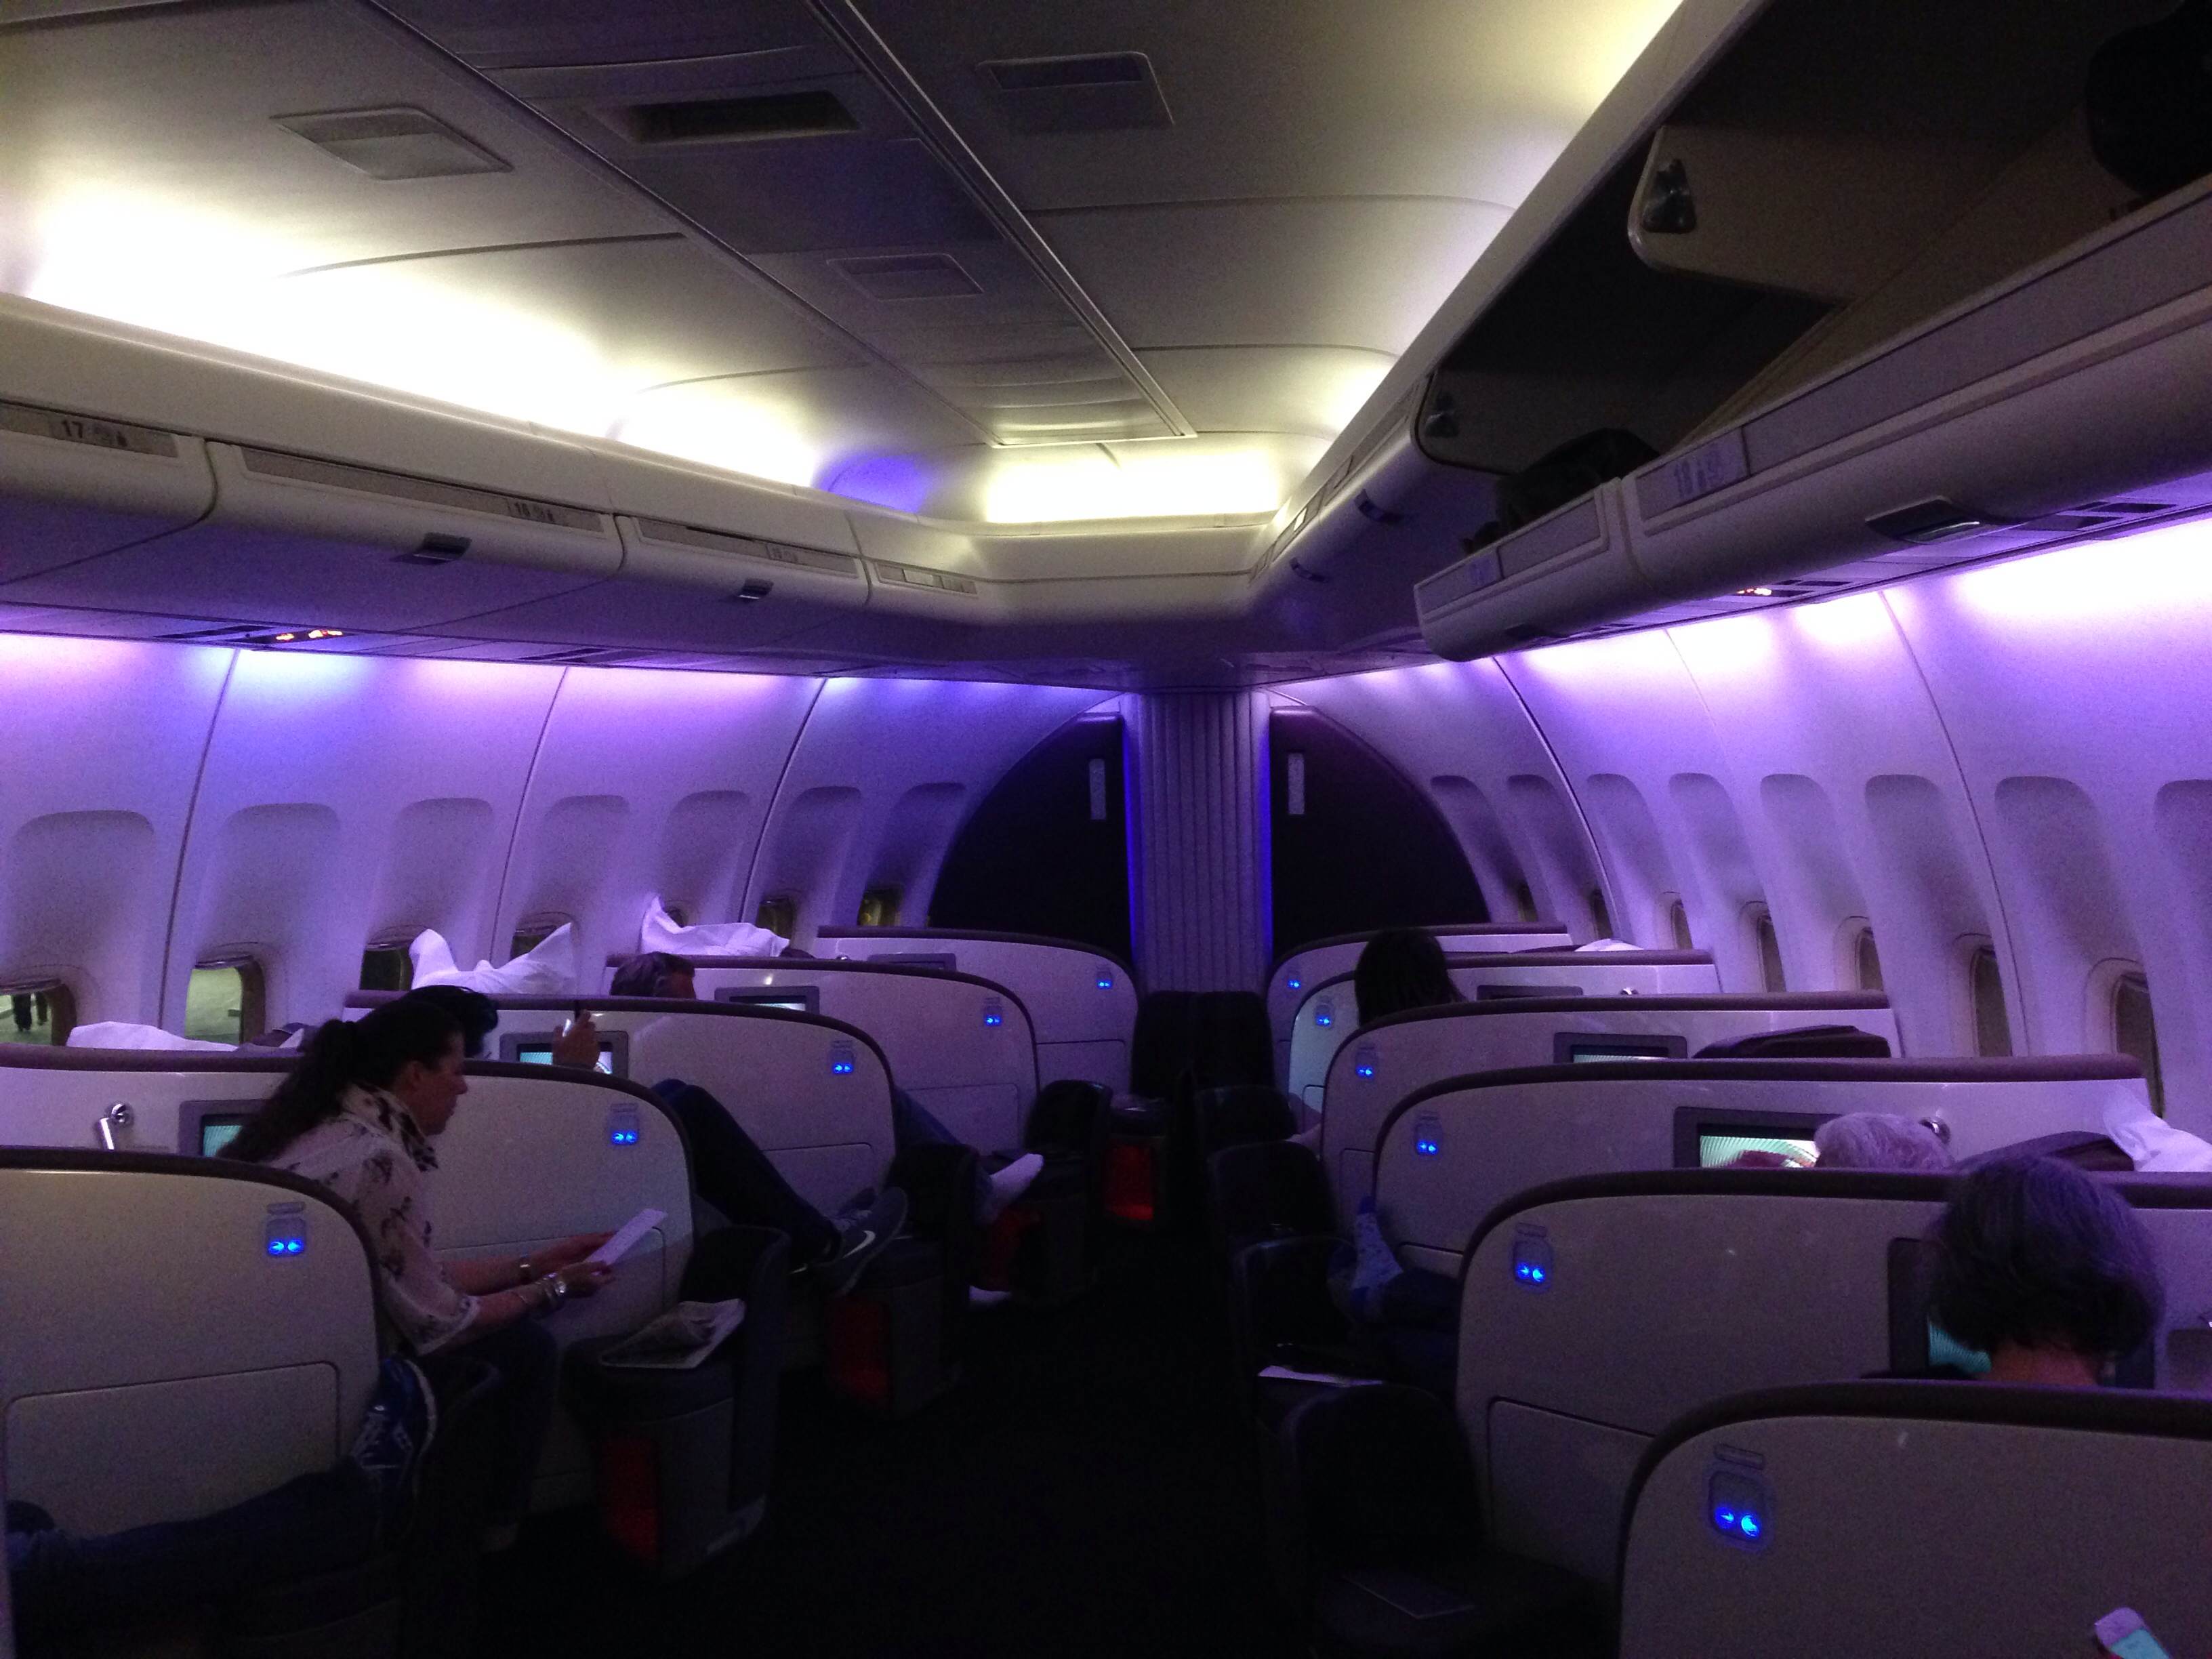 Review: Virgin Atlantic Upper Class Review